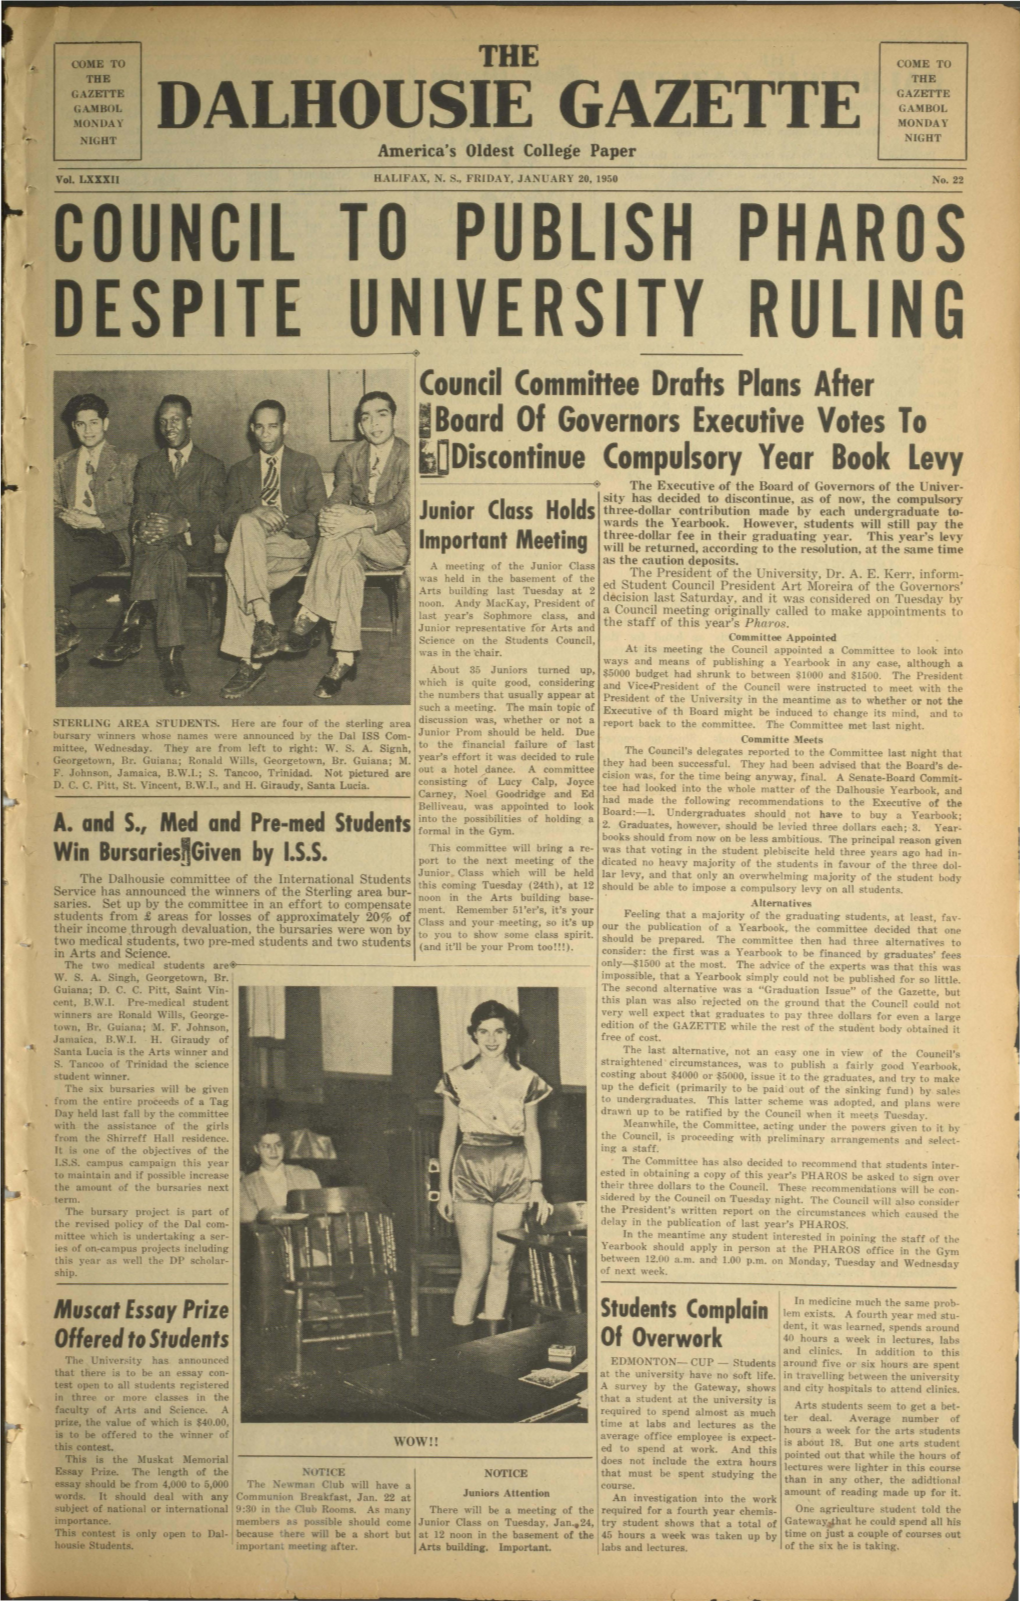 DALHOUSIE GAZETTE MONDAY NIGHT NIGHT America's Oldest College Paper